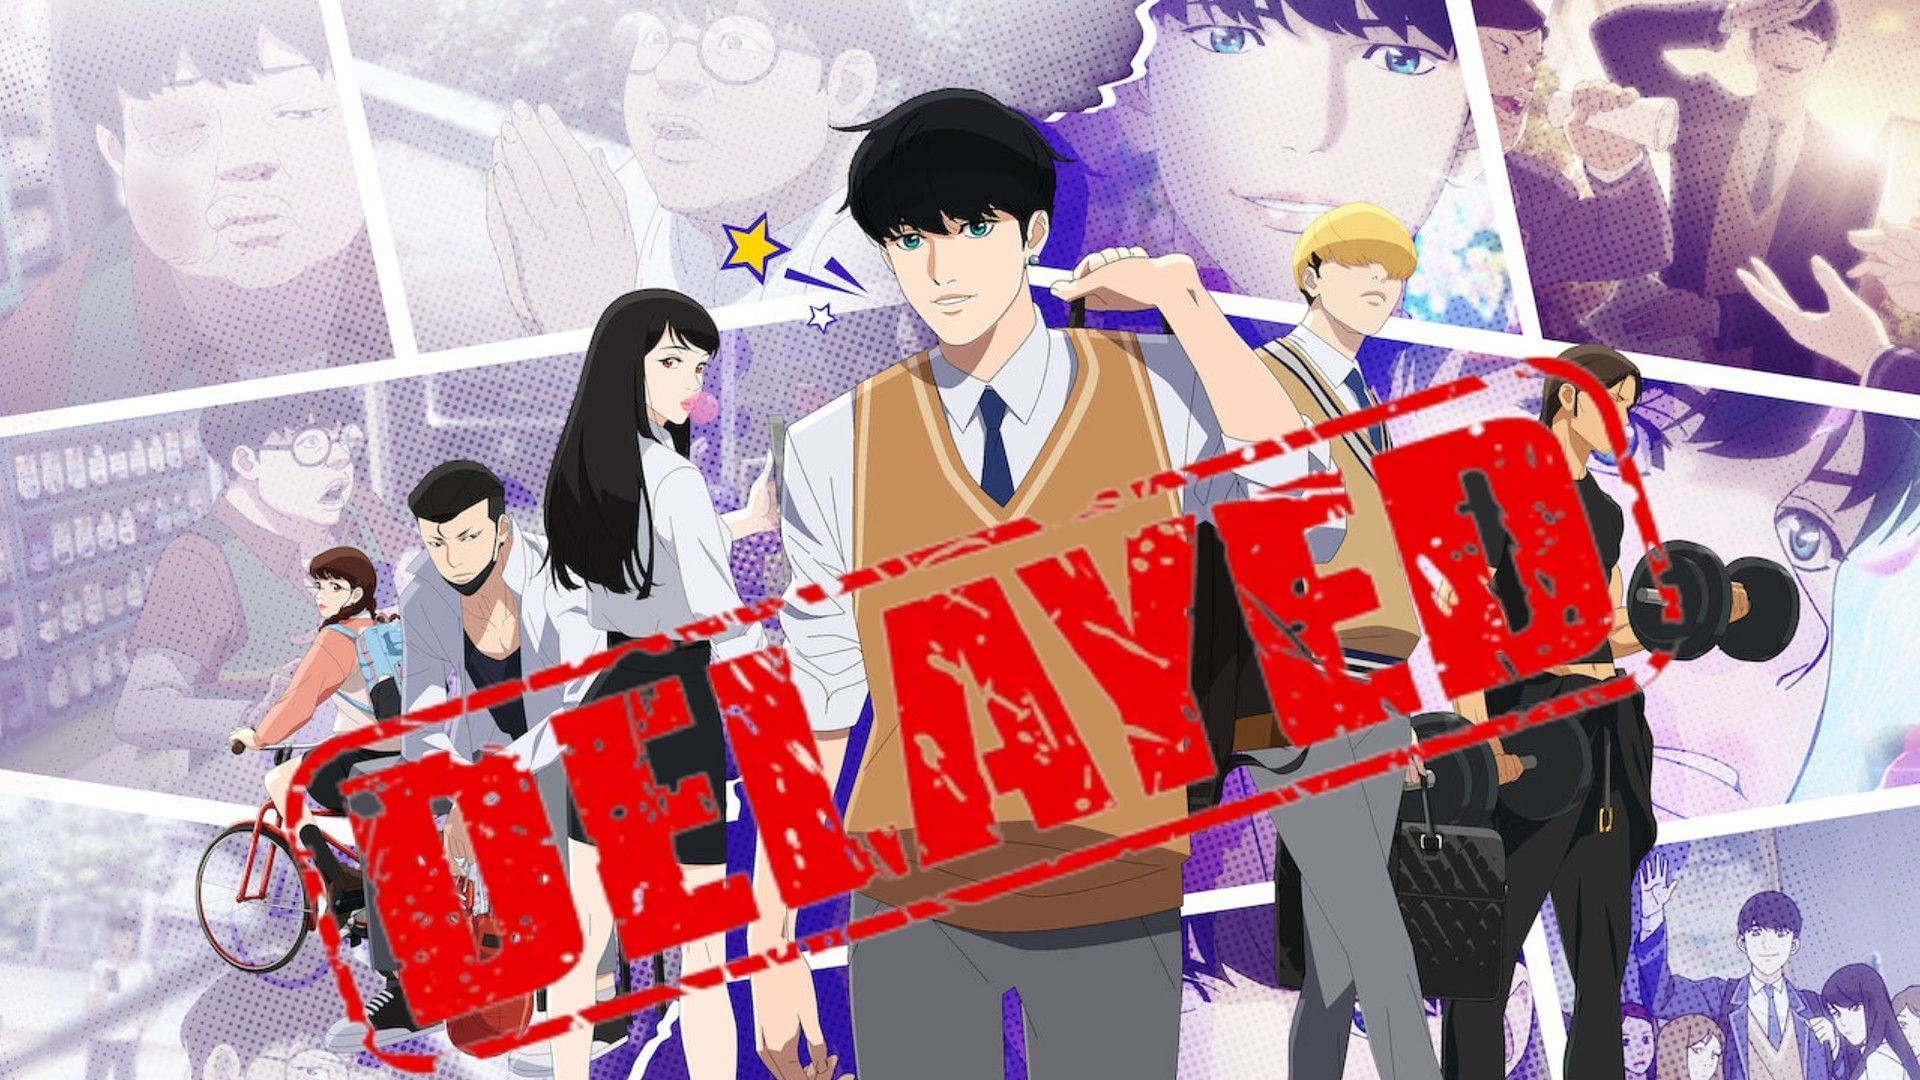 Lookism anime premiere delayed (Image via Sportskeeda)